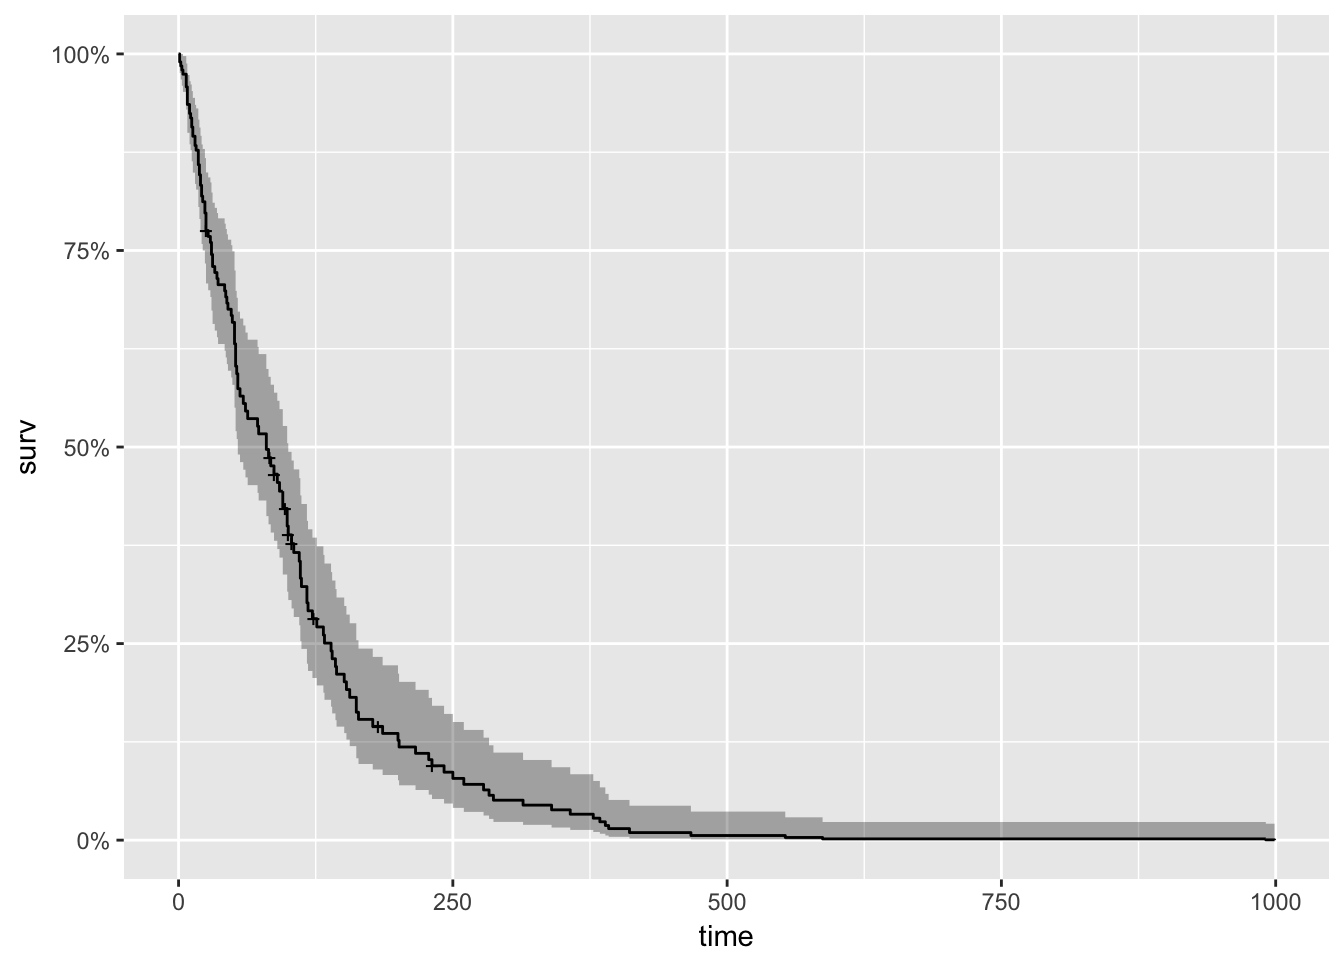 Kaplan–Meier estimates of survivorship function during development of